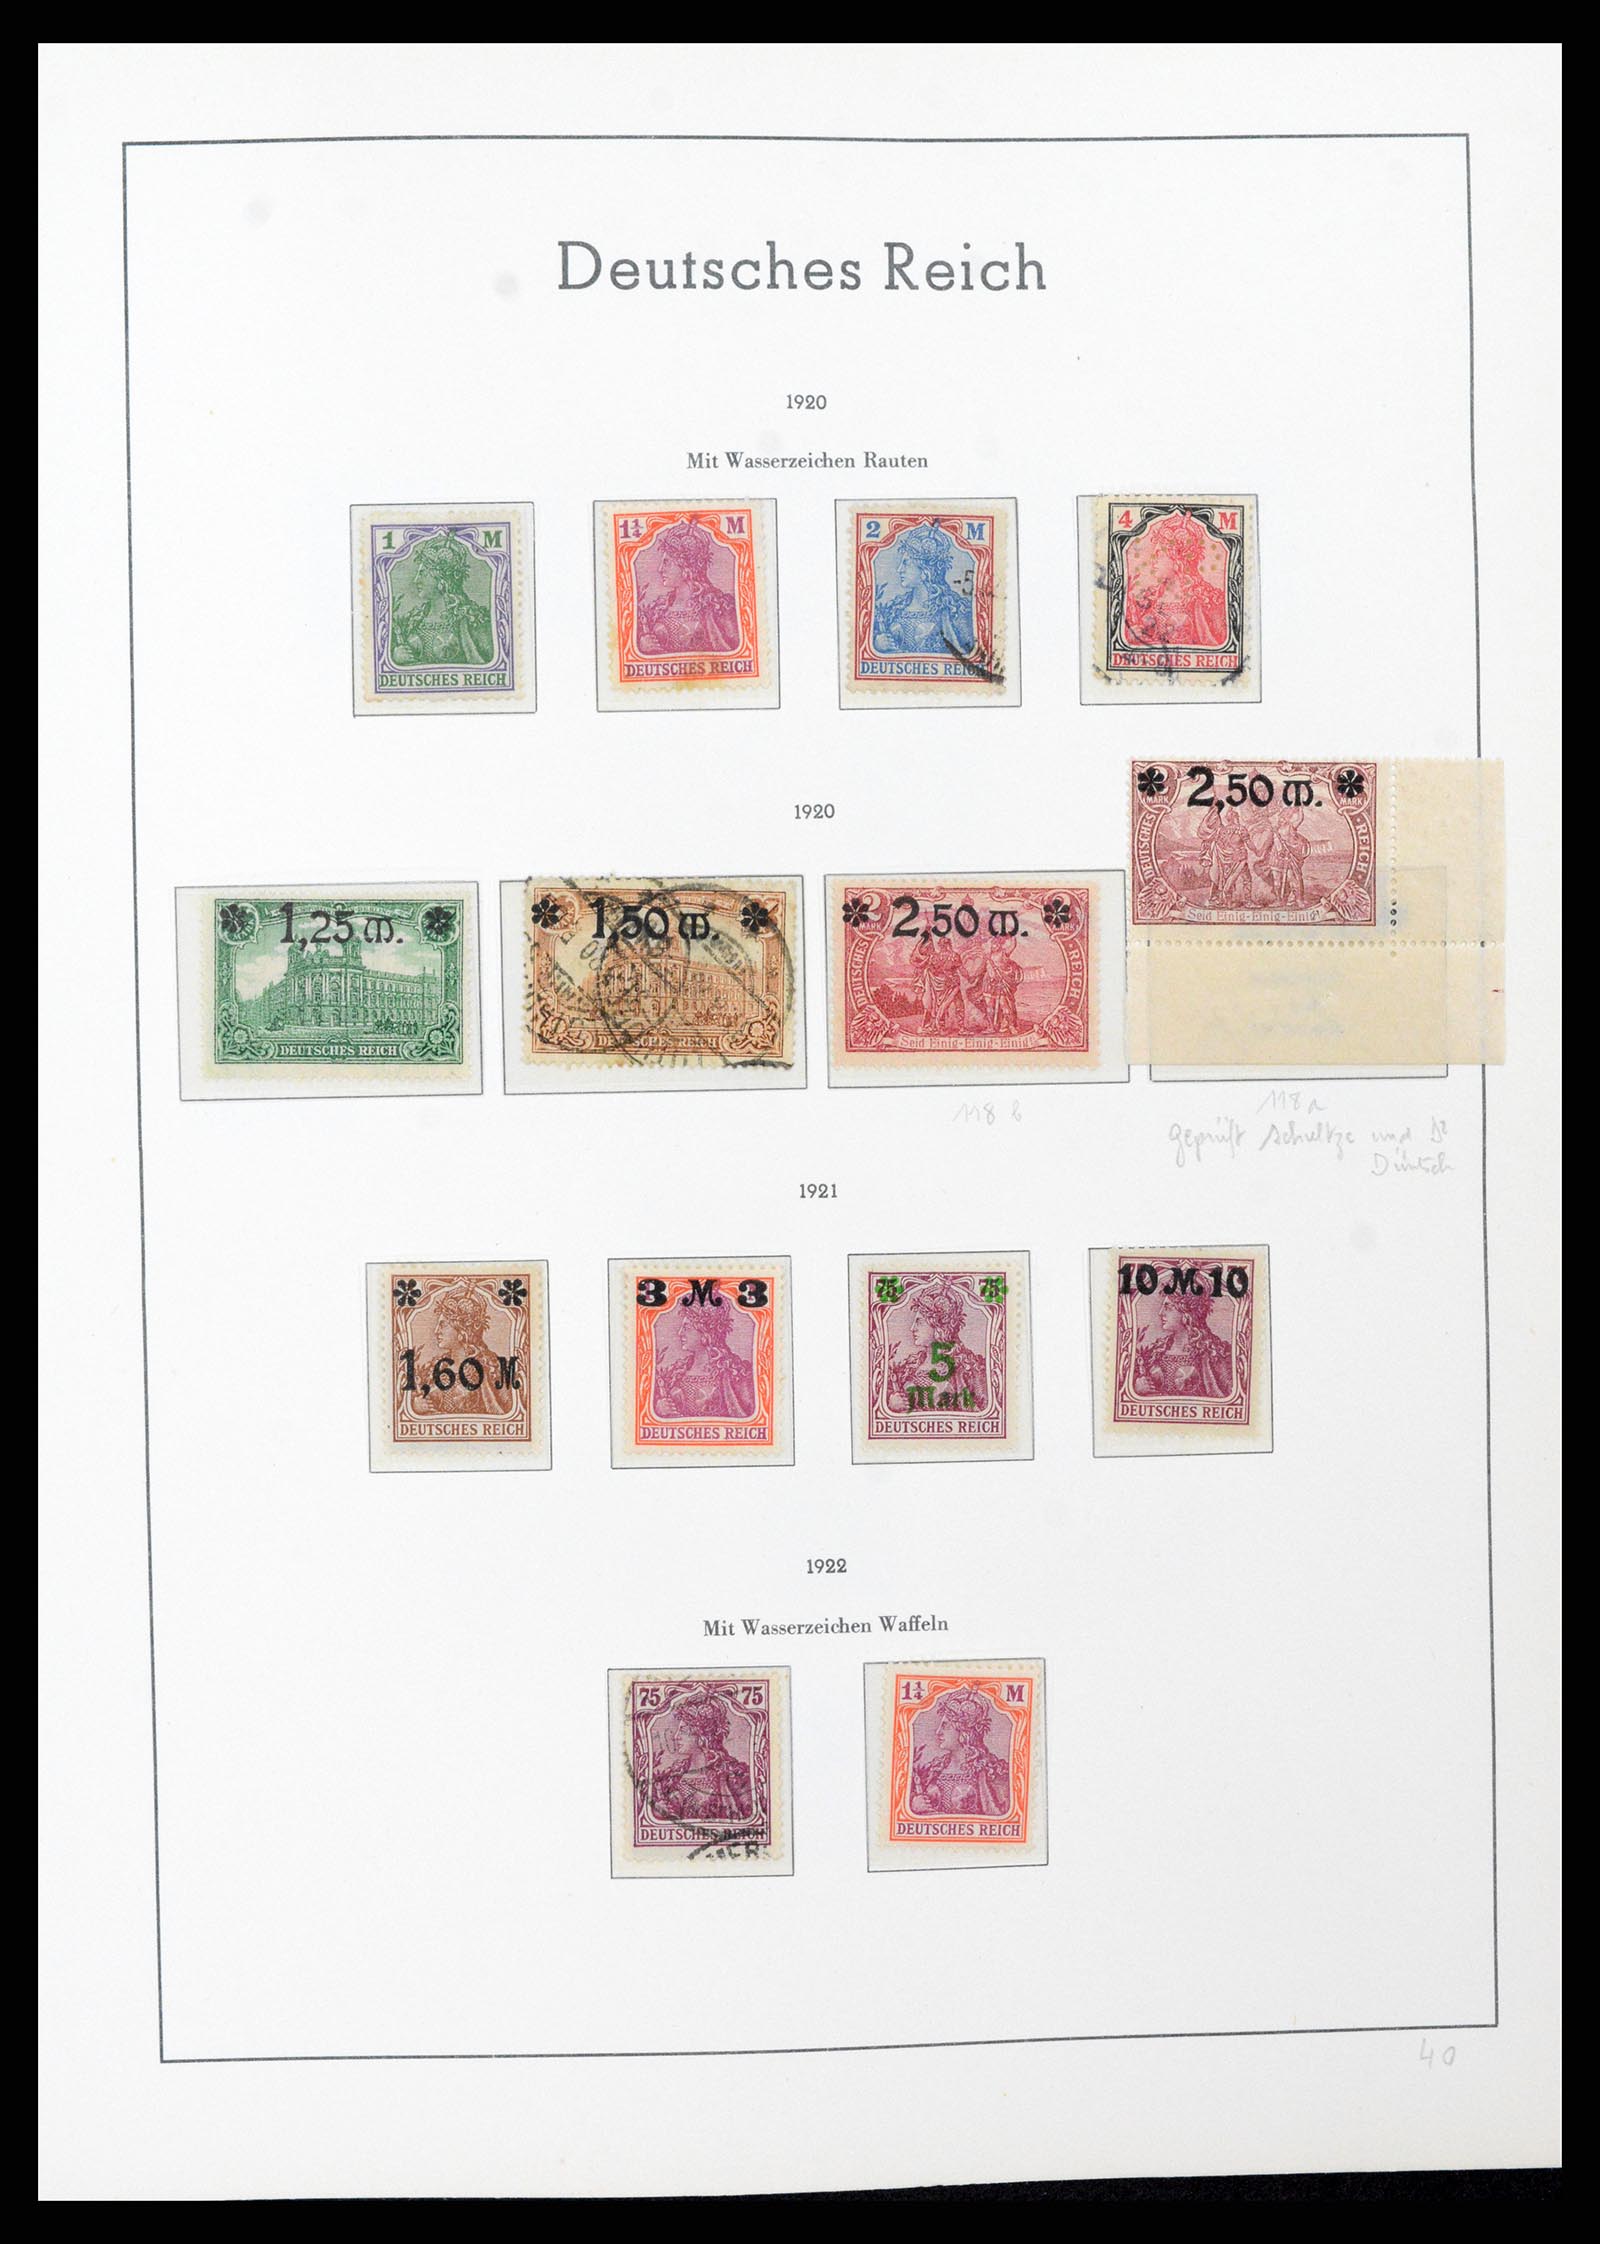 37589 014 - Stamp collection 37589 German Reich 1872-1945.